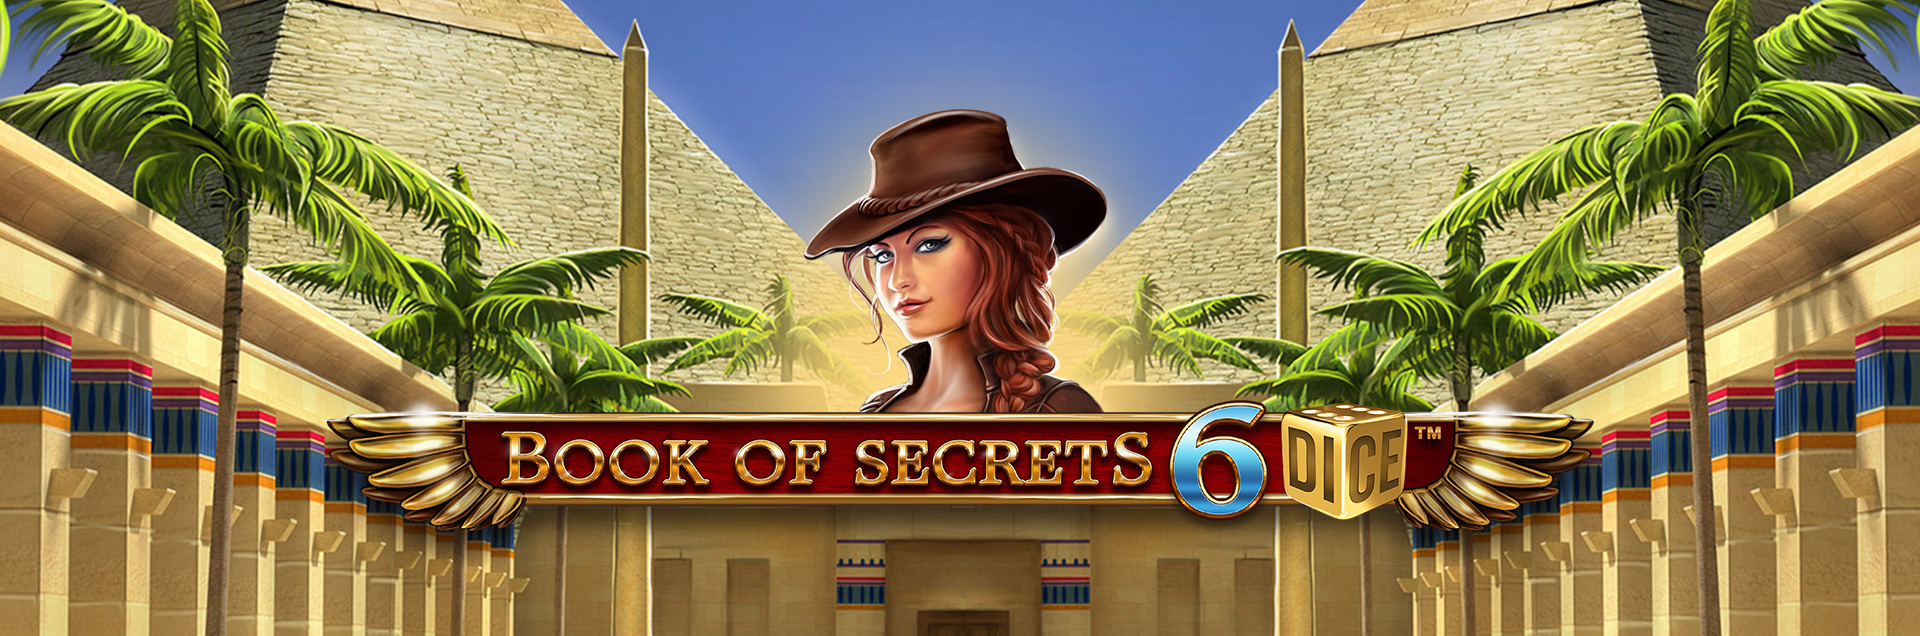 Book of Secrets 6 Dice header games final